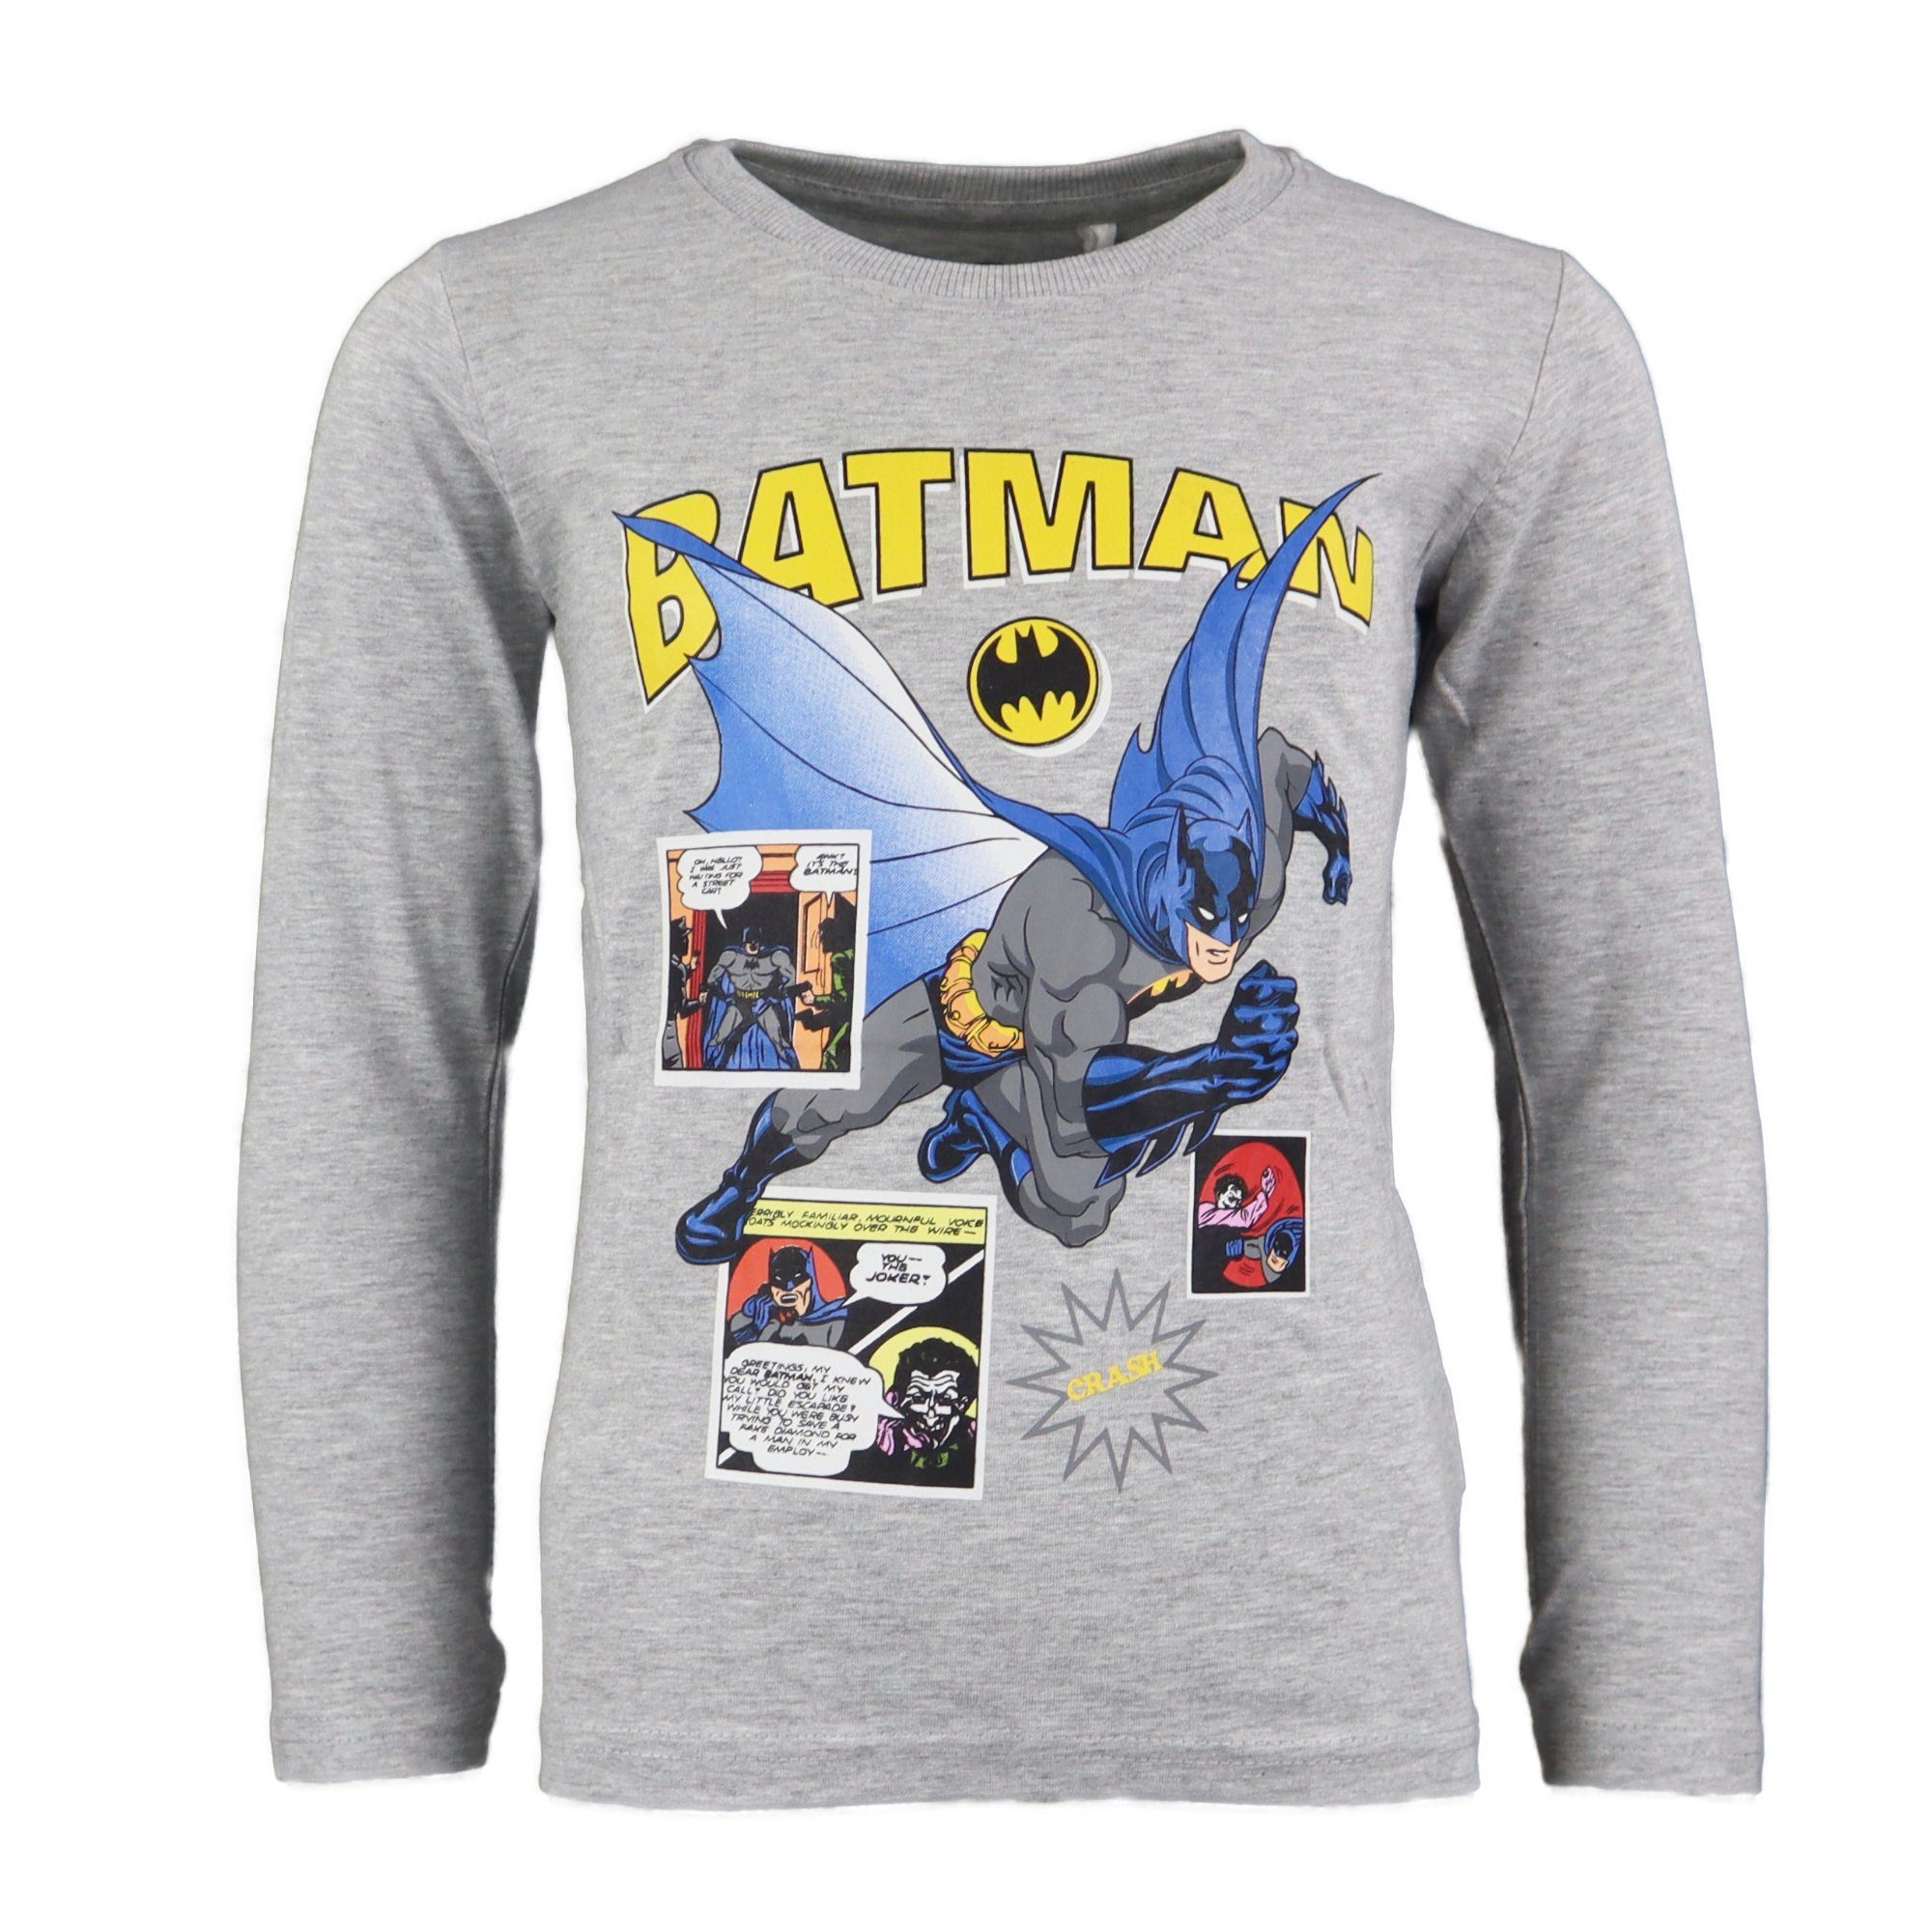 DC Comics Langarmshirt »Batman Kinder Jungen Shirt« Gr. 104 bis 134,  Schwarz oder Grau online kaufen | OTTO